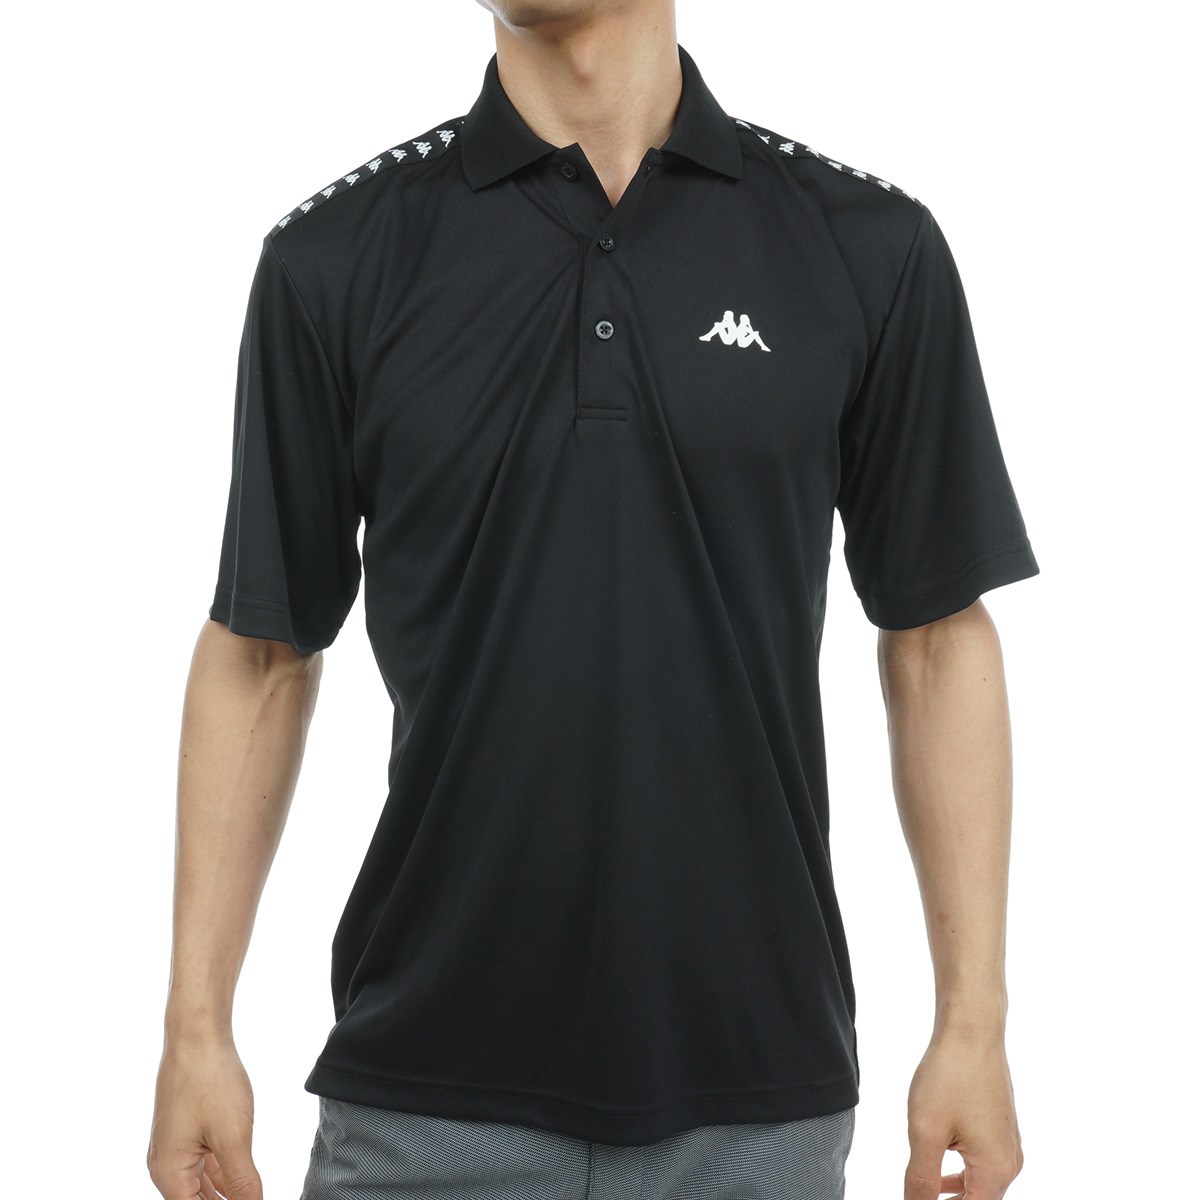 Kappa カッパ Lサイズ ゴルフ 半袖ポロシャツ Tシャツ 通販